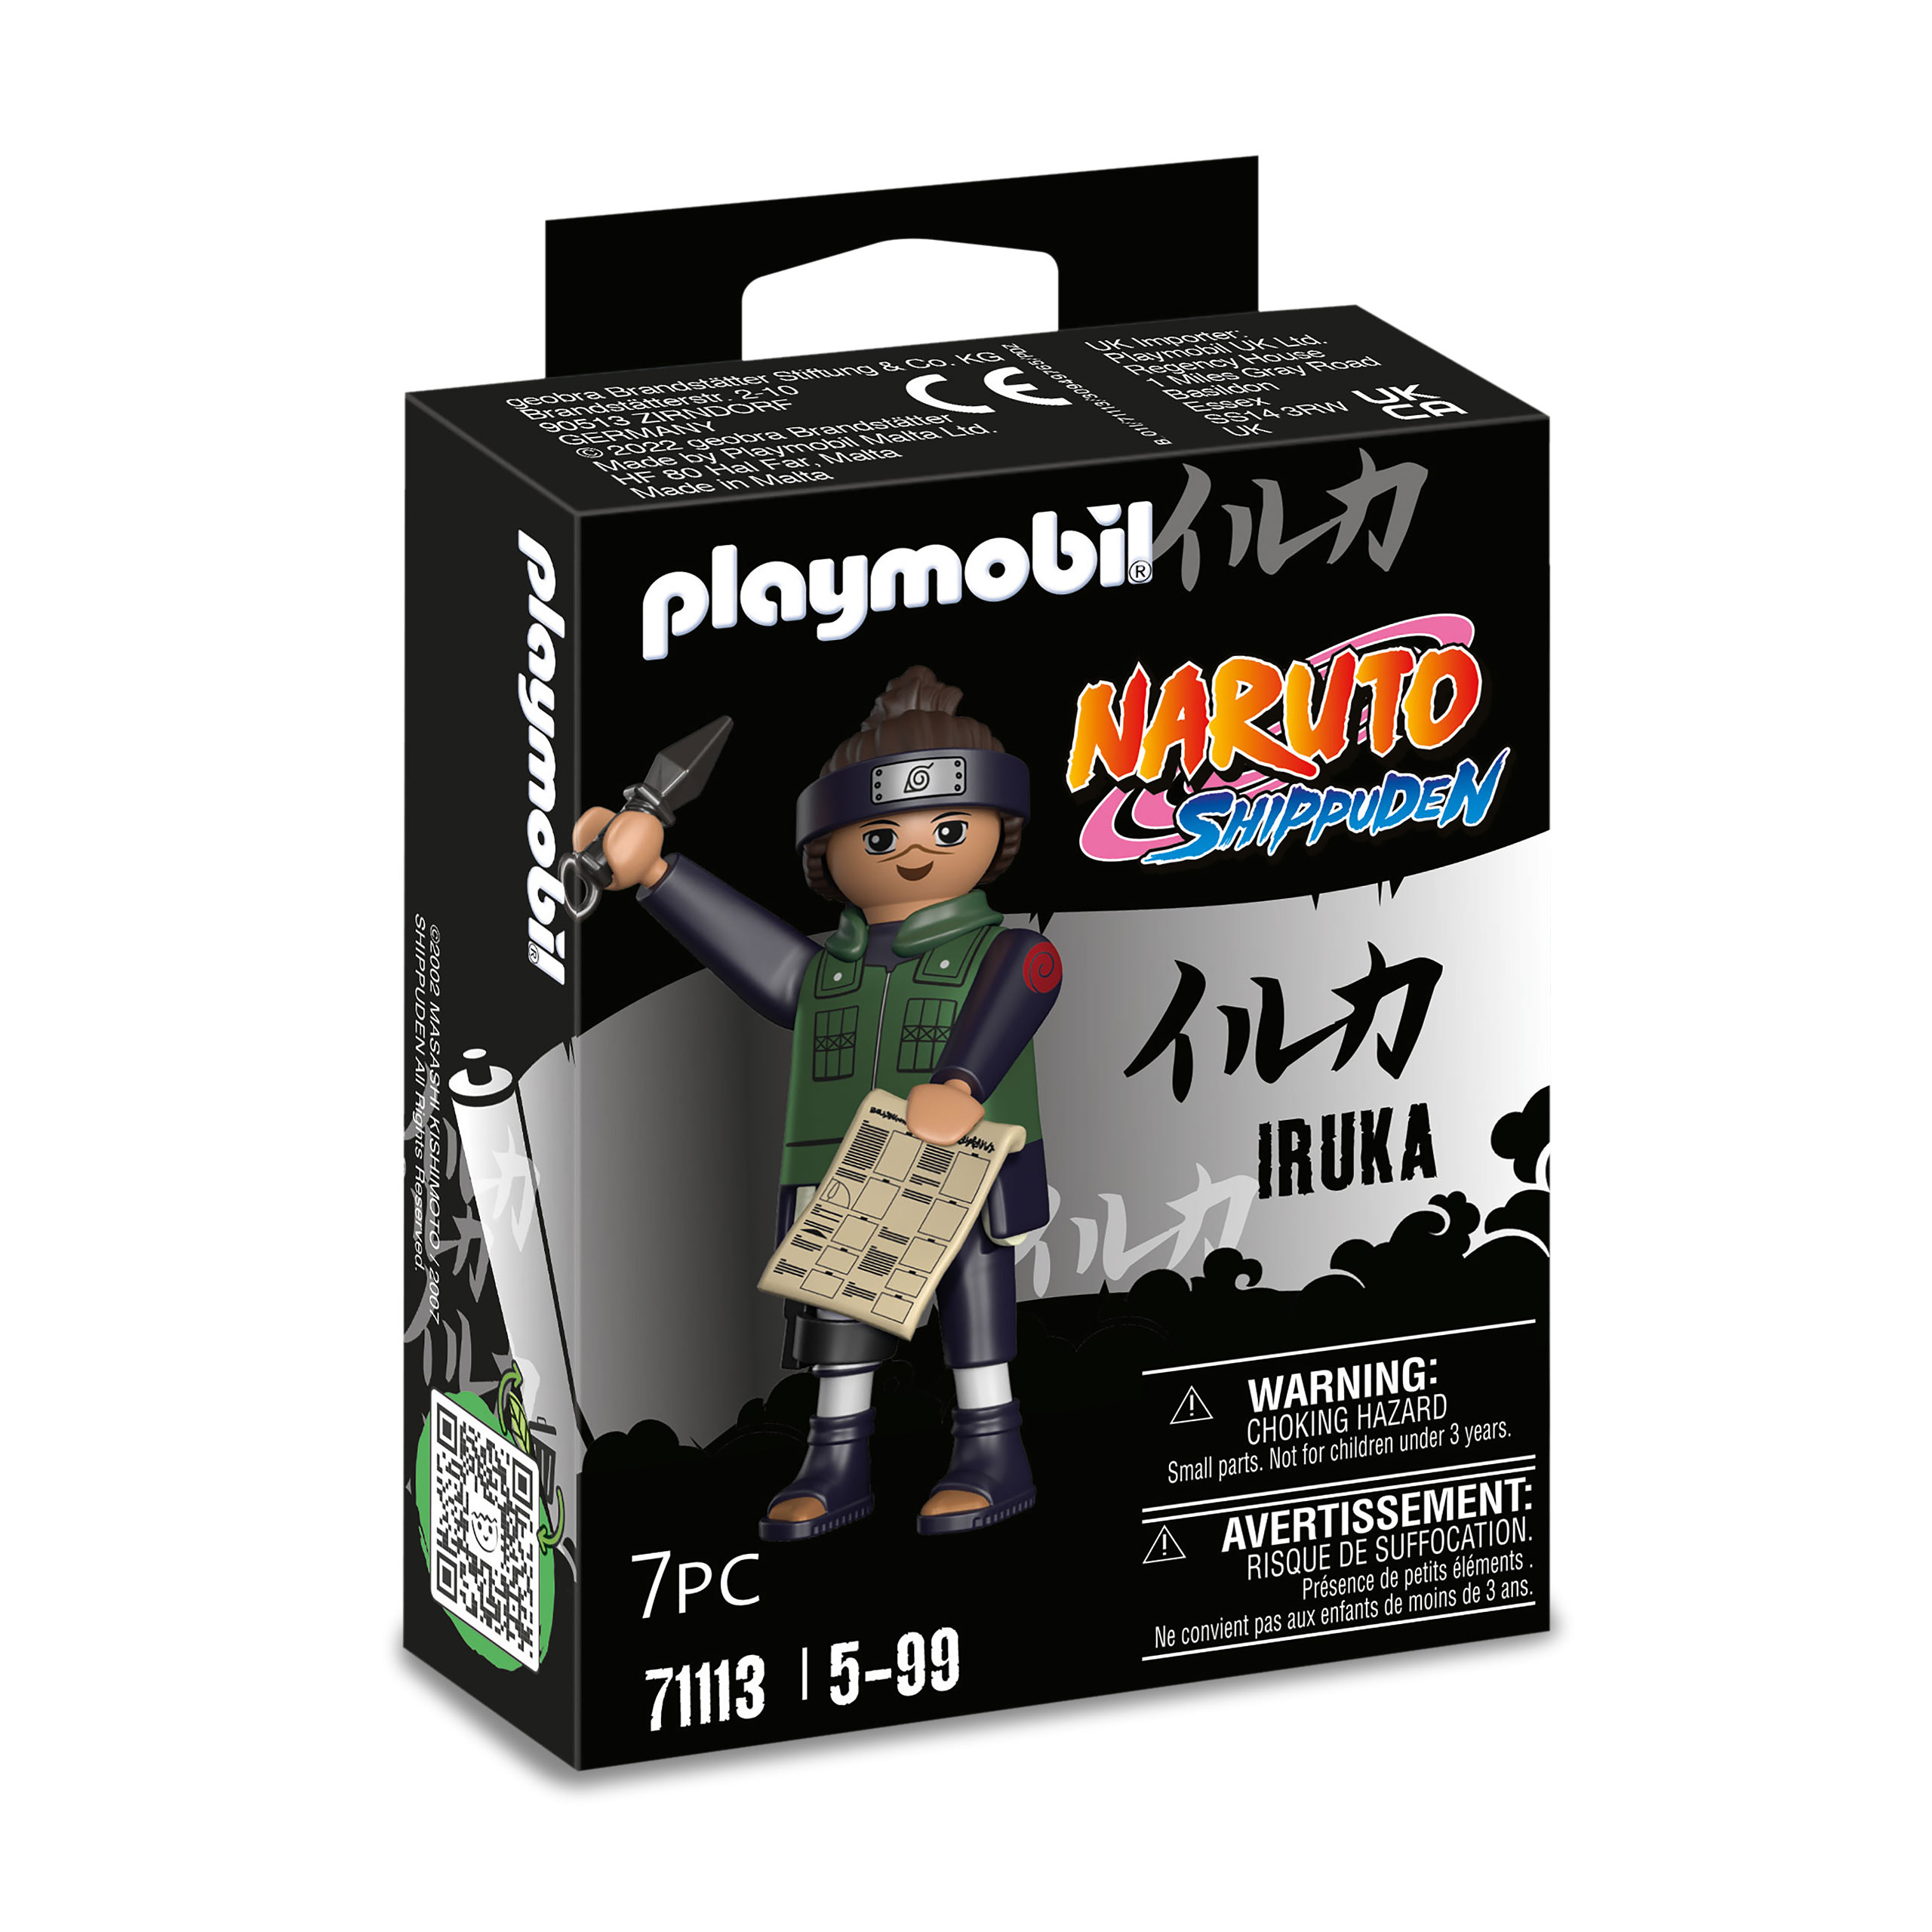 Naruto - Iruka Playmobil Figure